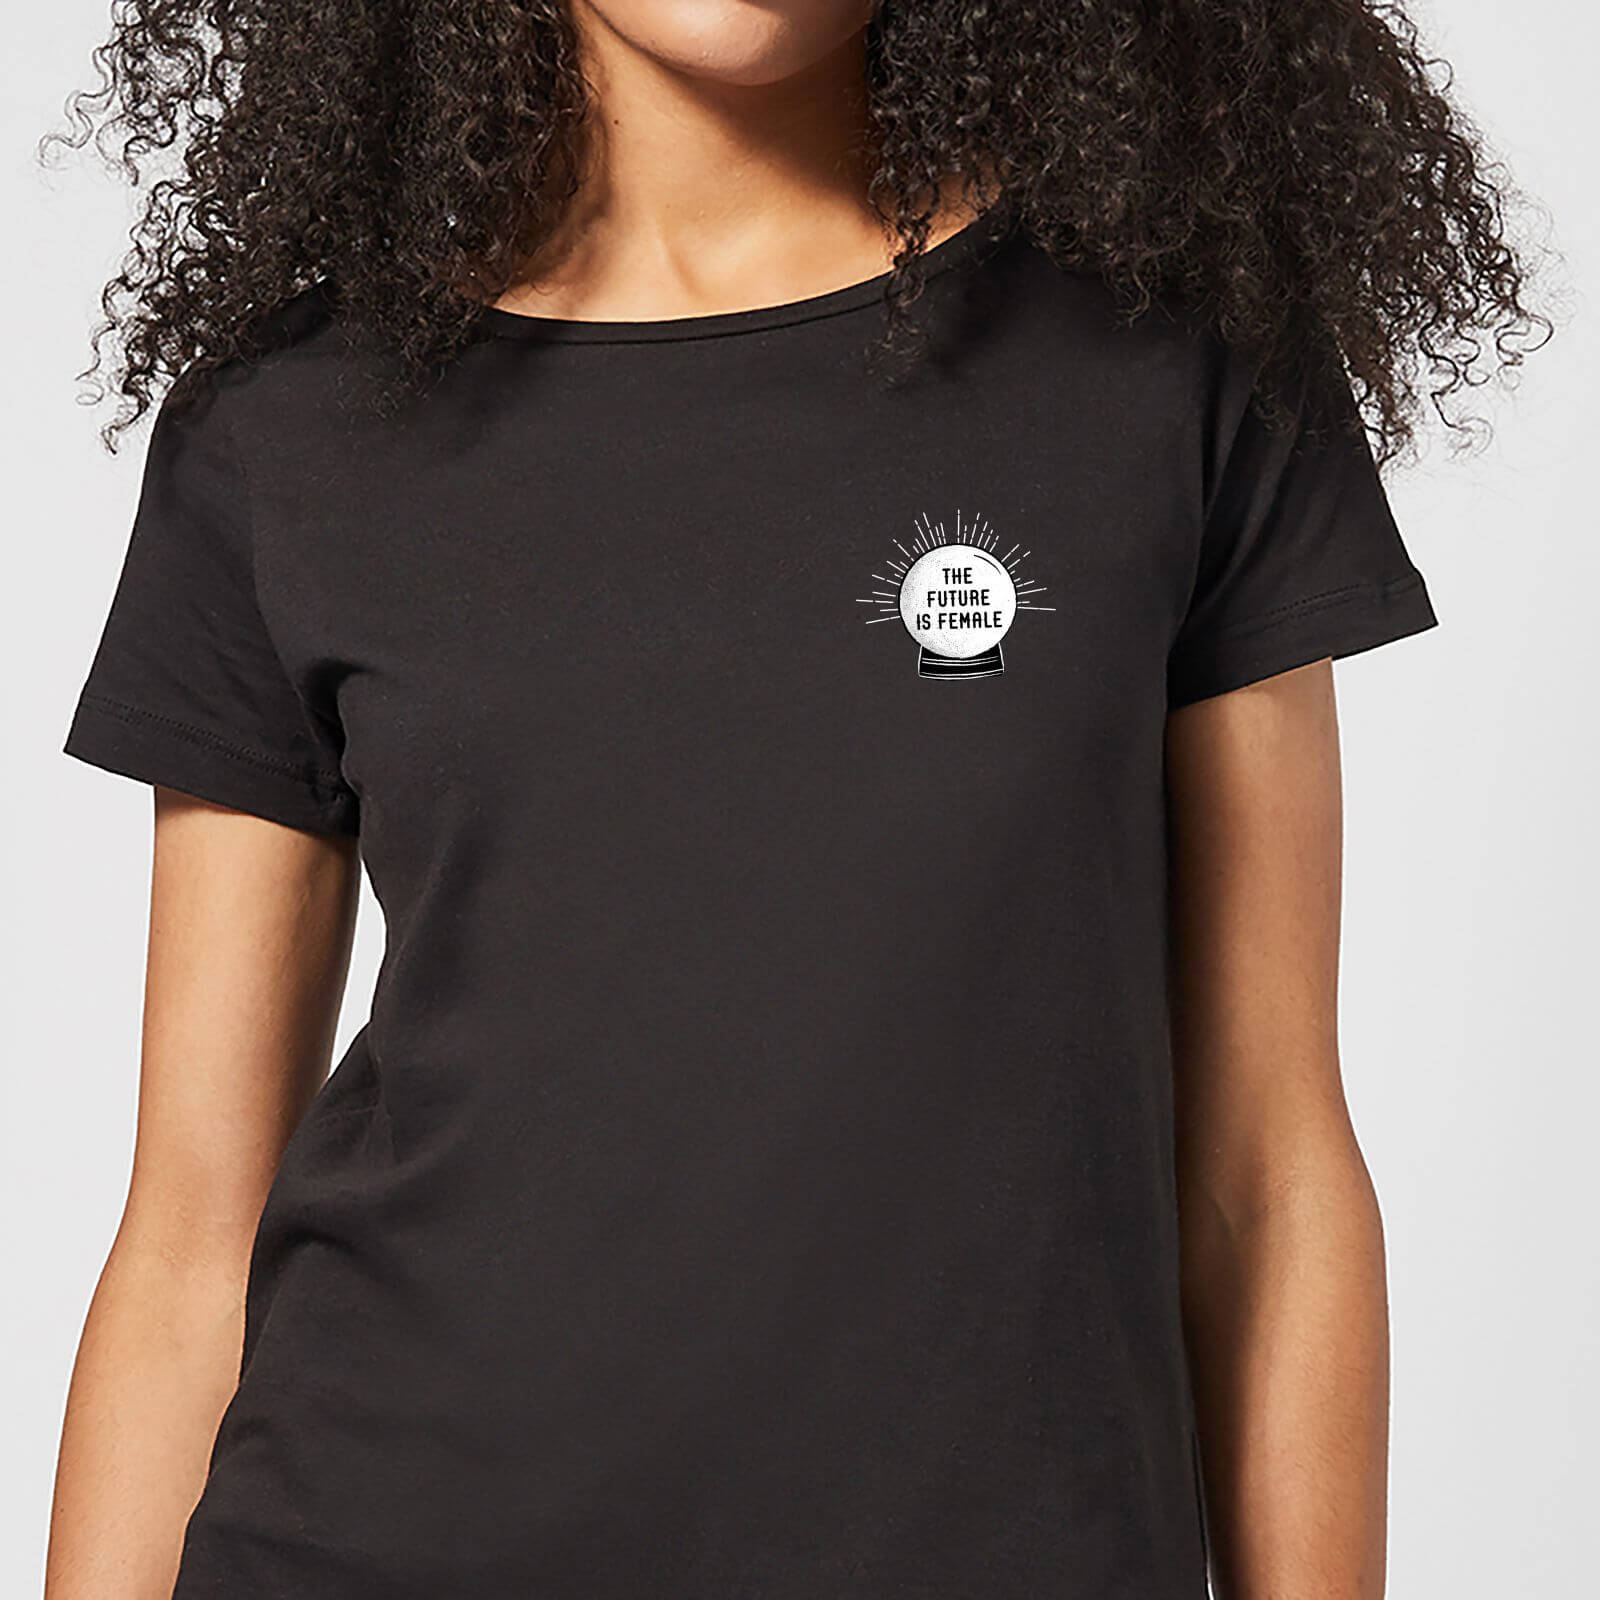 The Future Is Female Women's T-Shirt - Black - S - Black